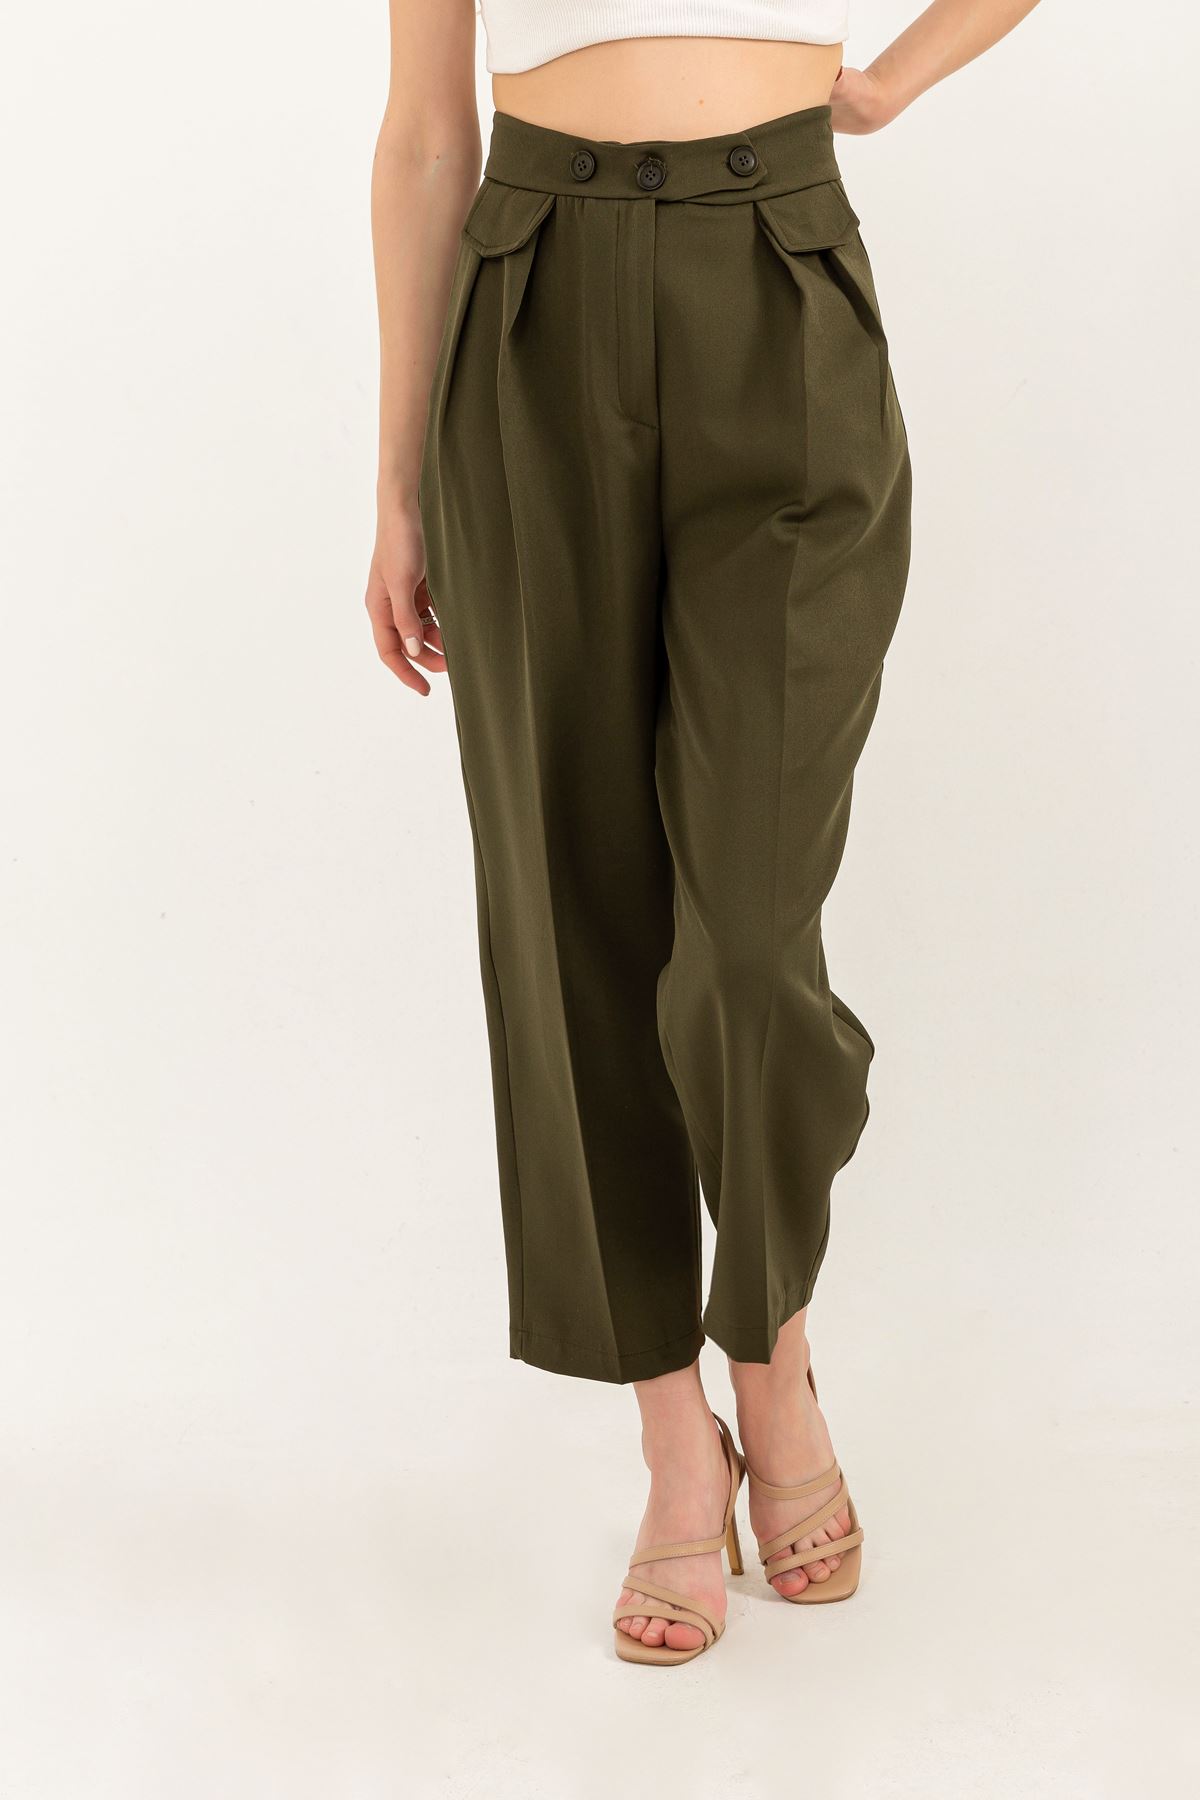 Atlas Fabric Ankle Length Carrot Style Women Trouser-Khaki 